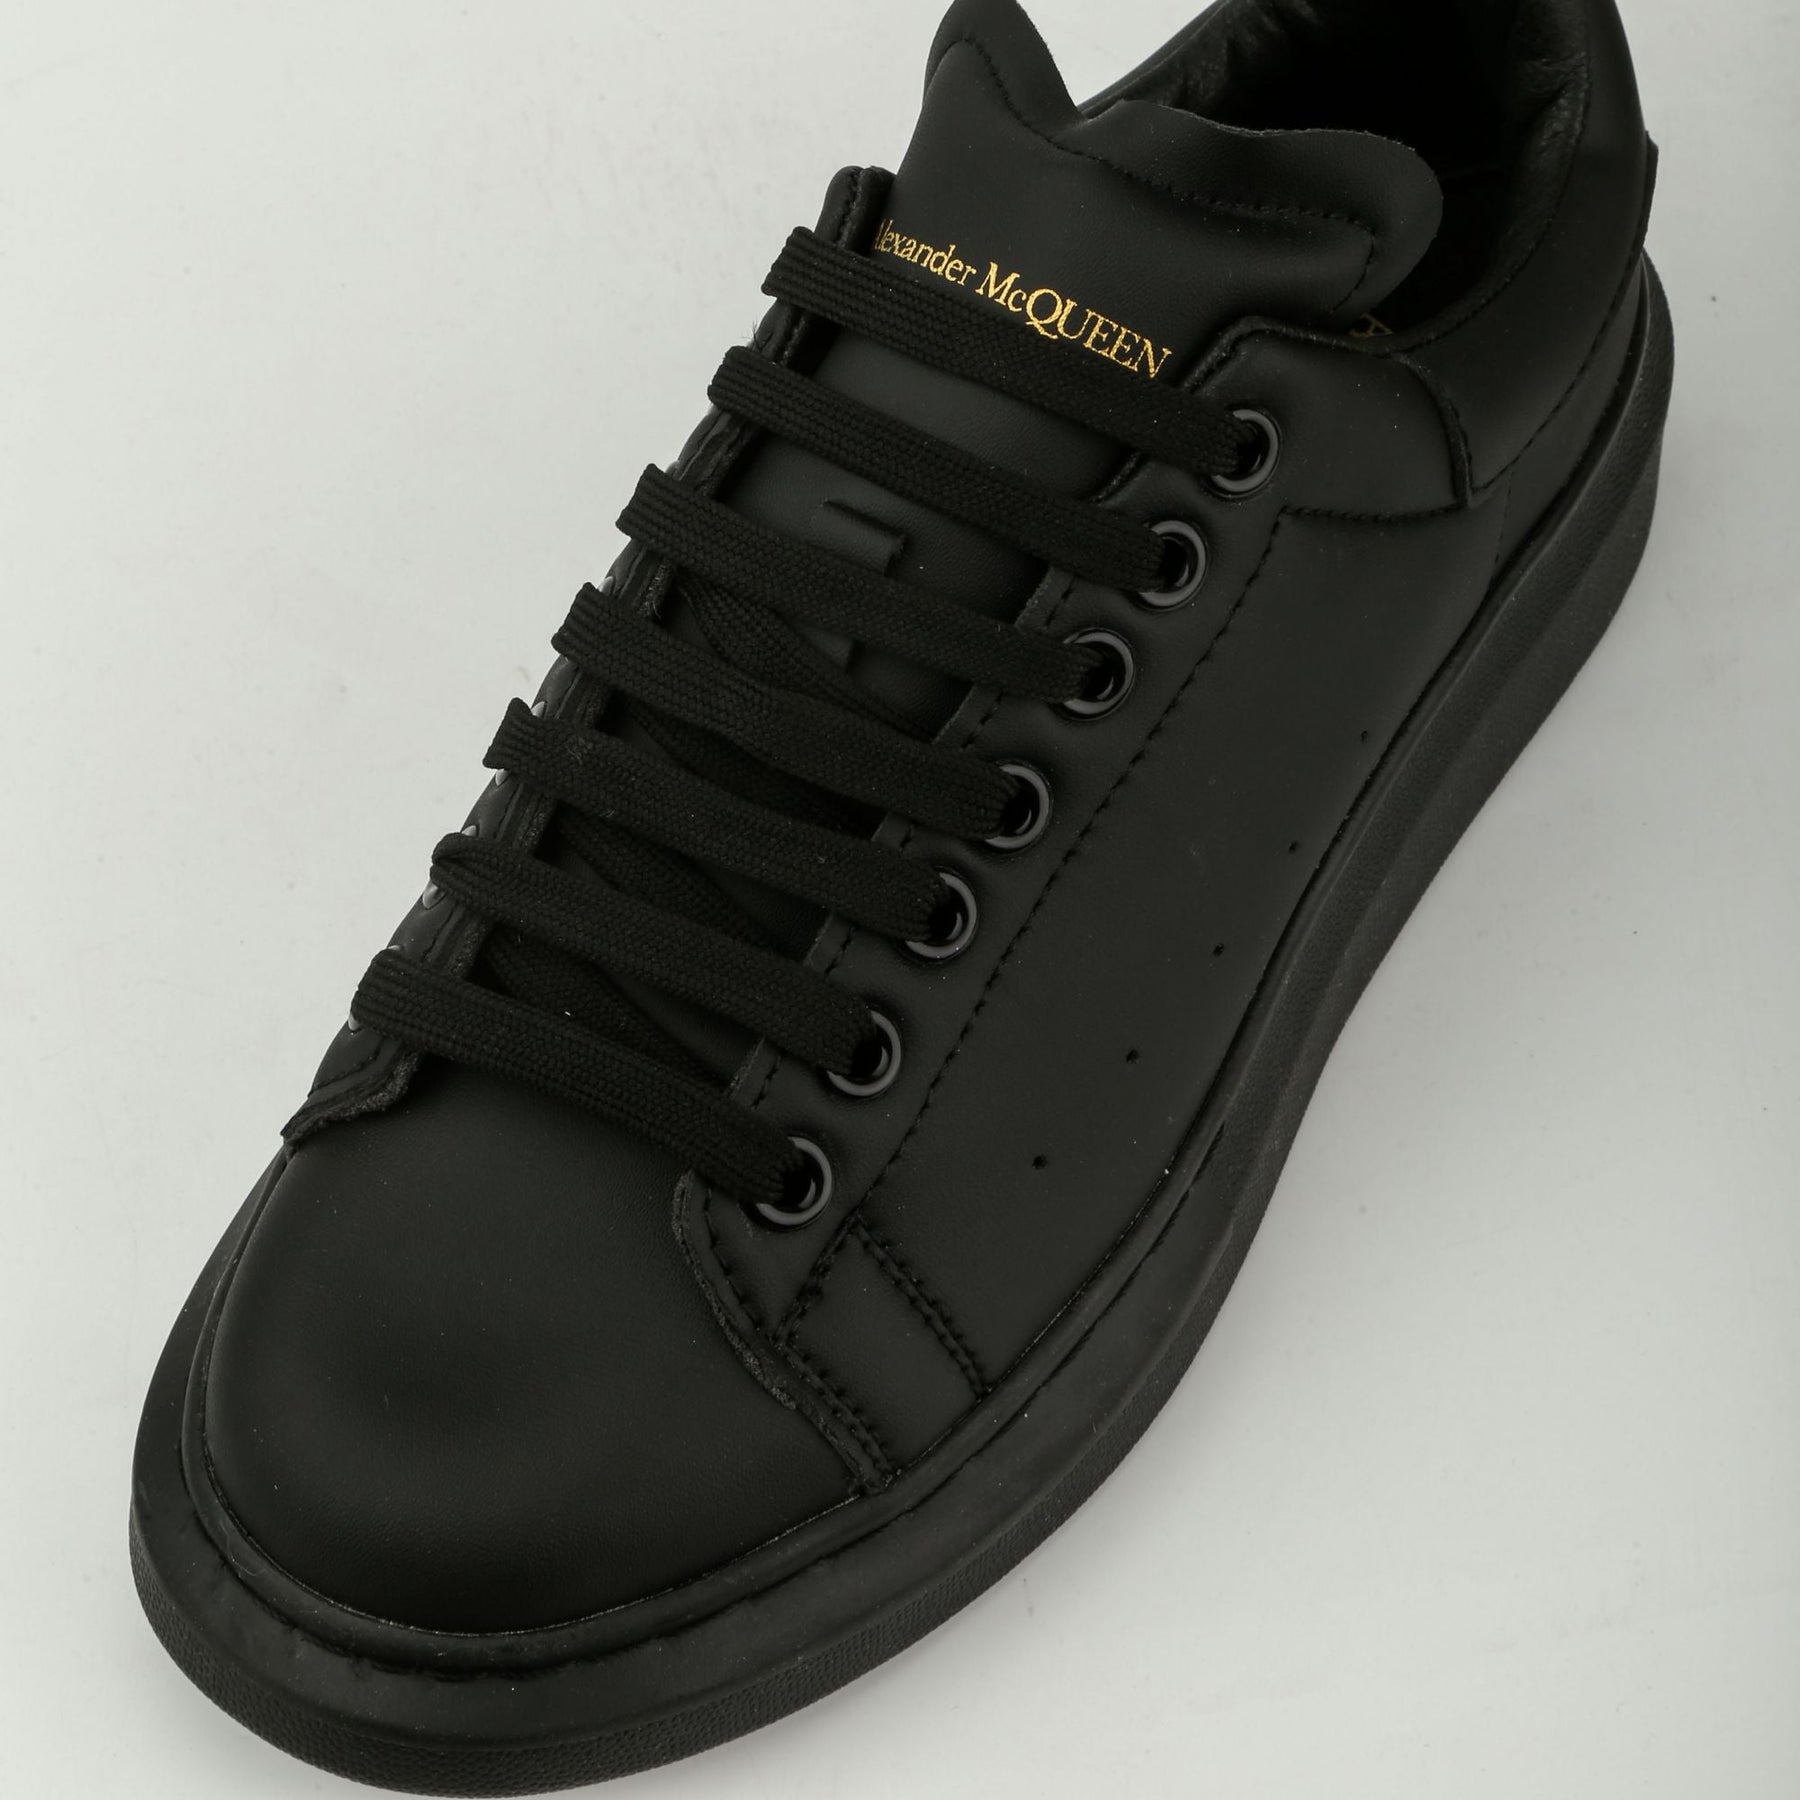 Alexander McQueen Triple Black - Premium Shoes from Sablelo.pk - Just Rs.3999! Shop now at Sablelo.pk